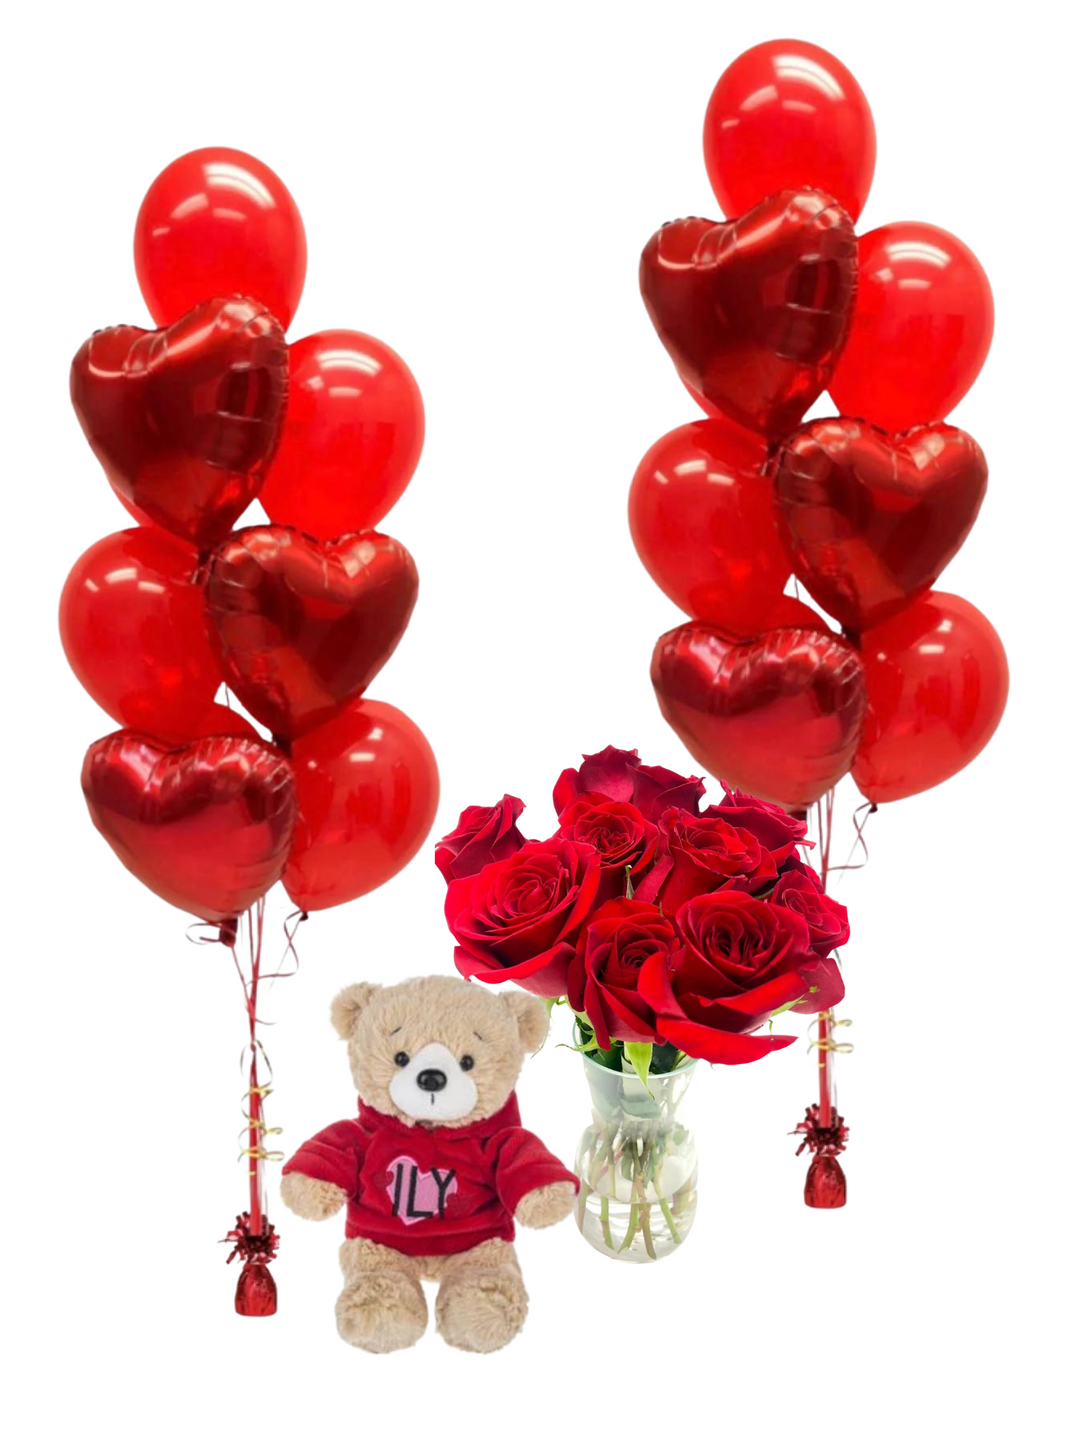 Valentine's day balloons toronto 